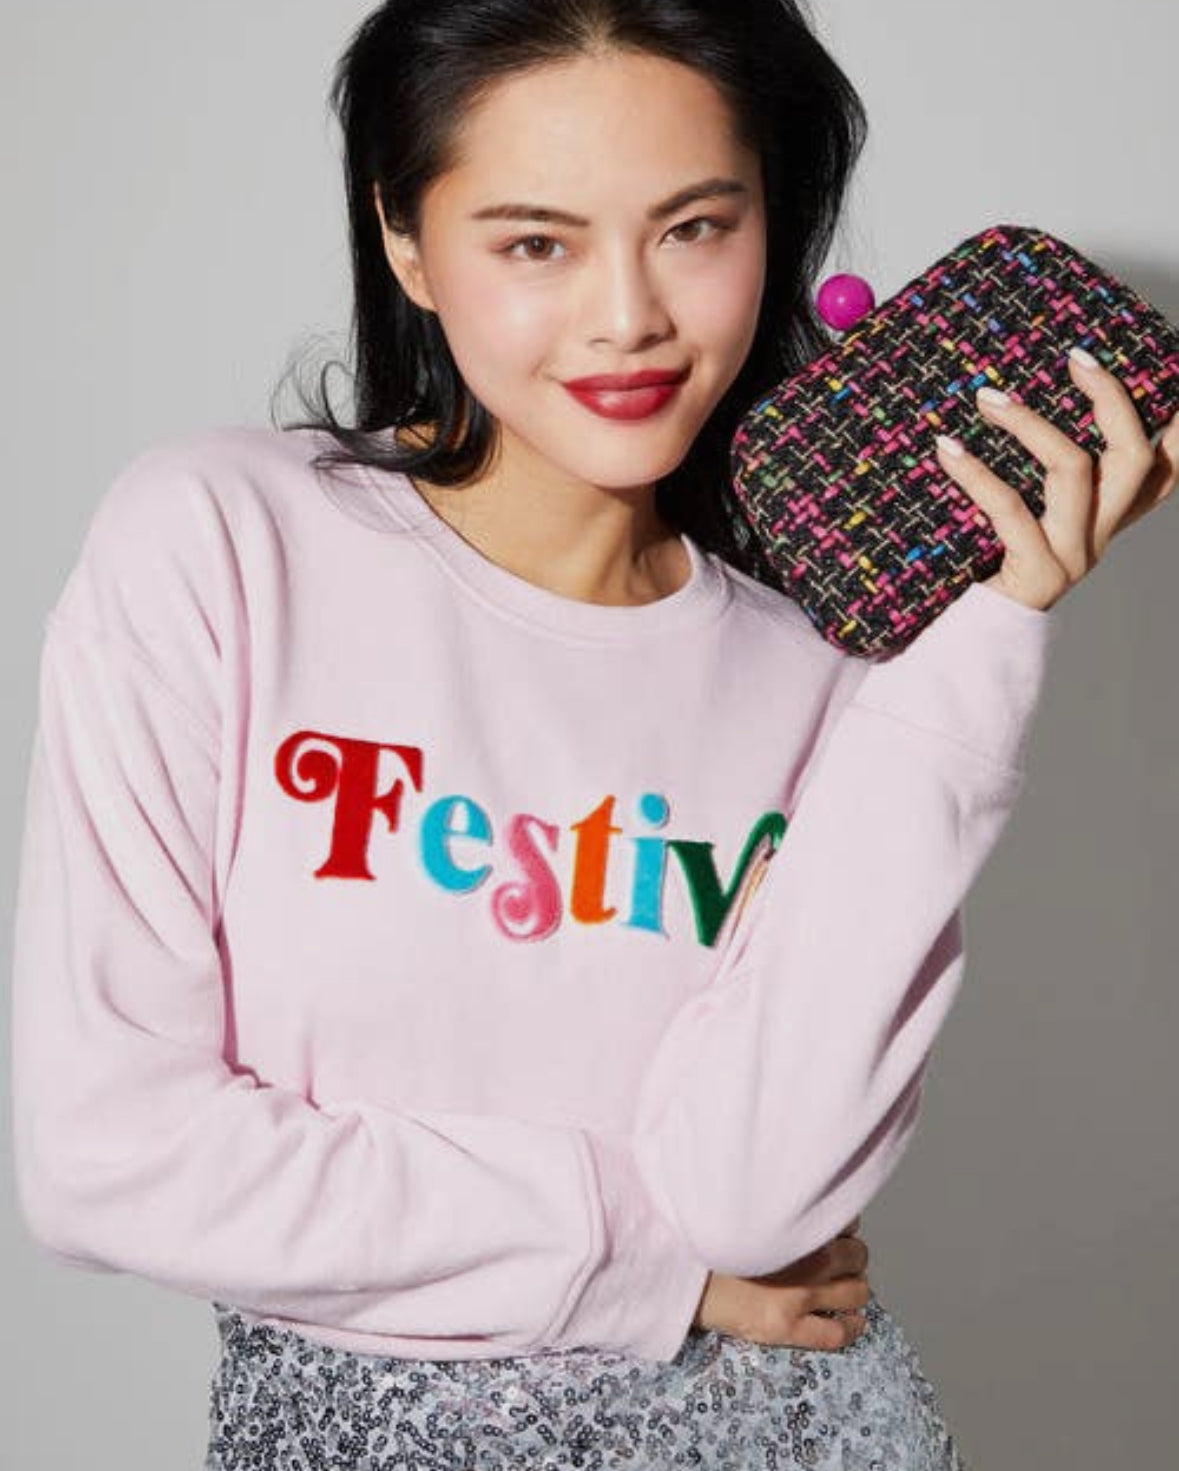 The Festive Sweatshirt